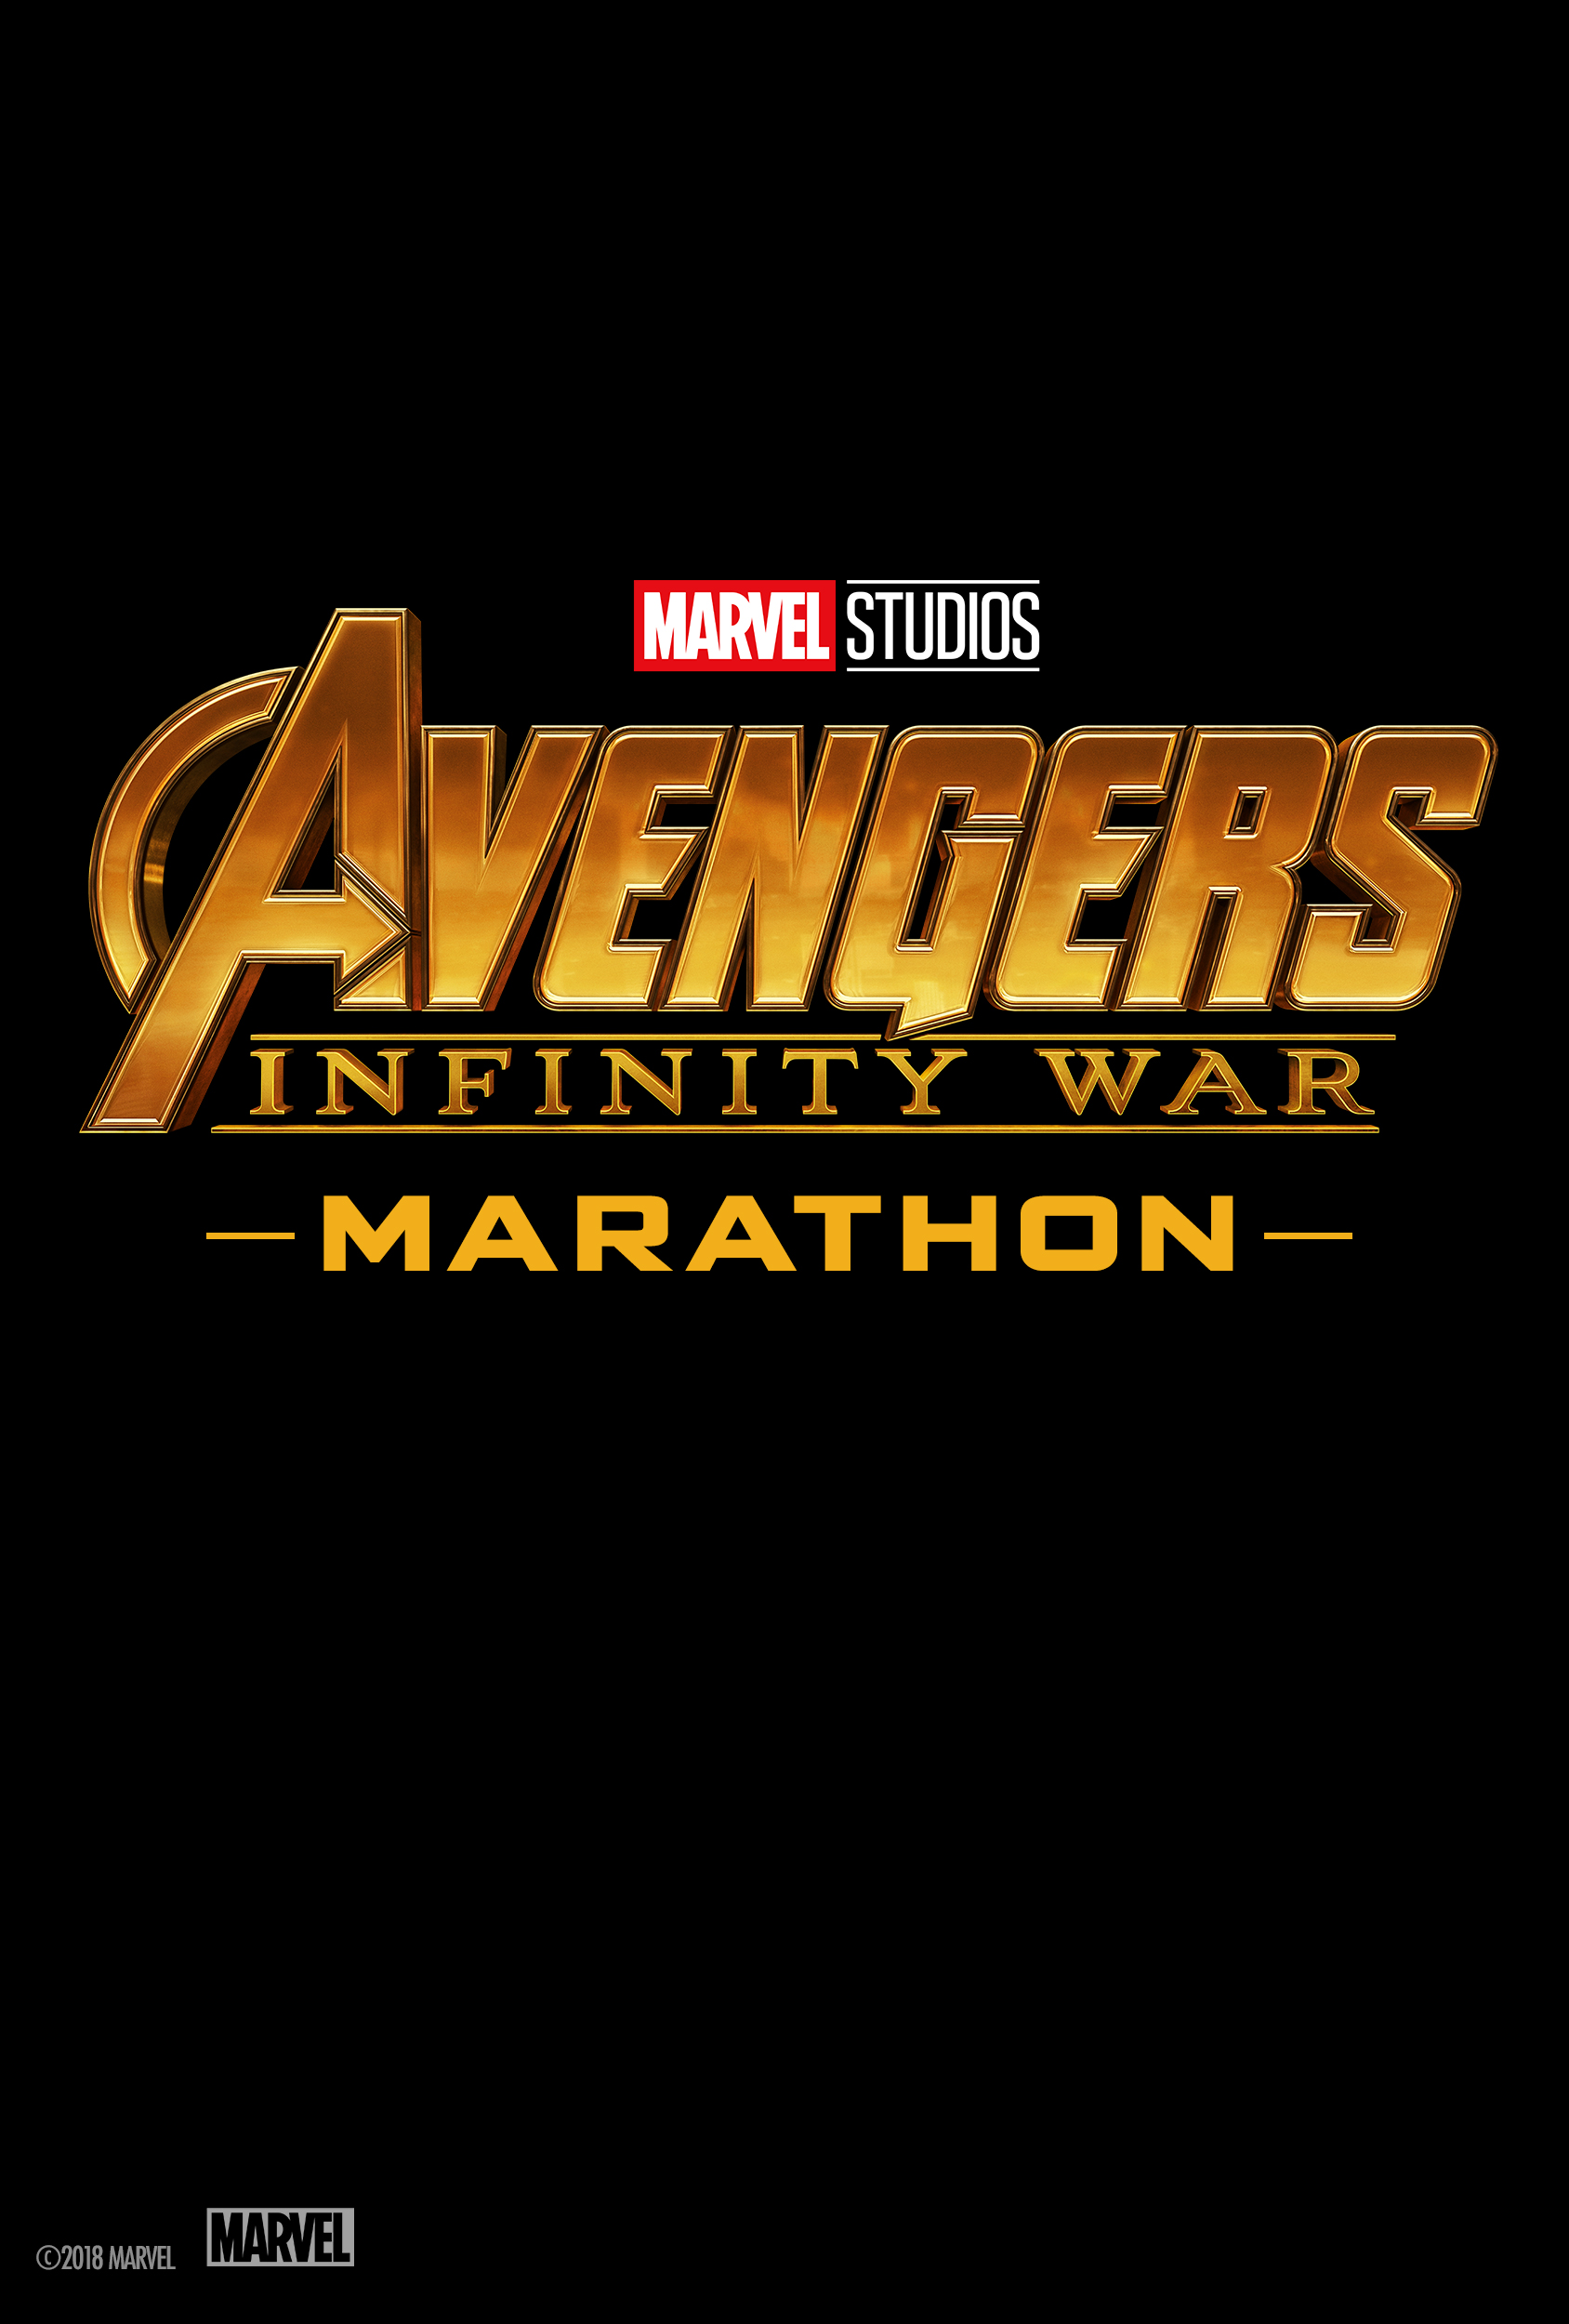 Avengers: Infinity War Marathon at an AMC Theatre near you